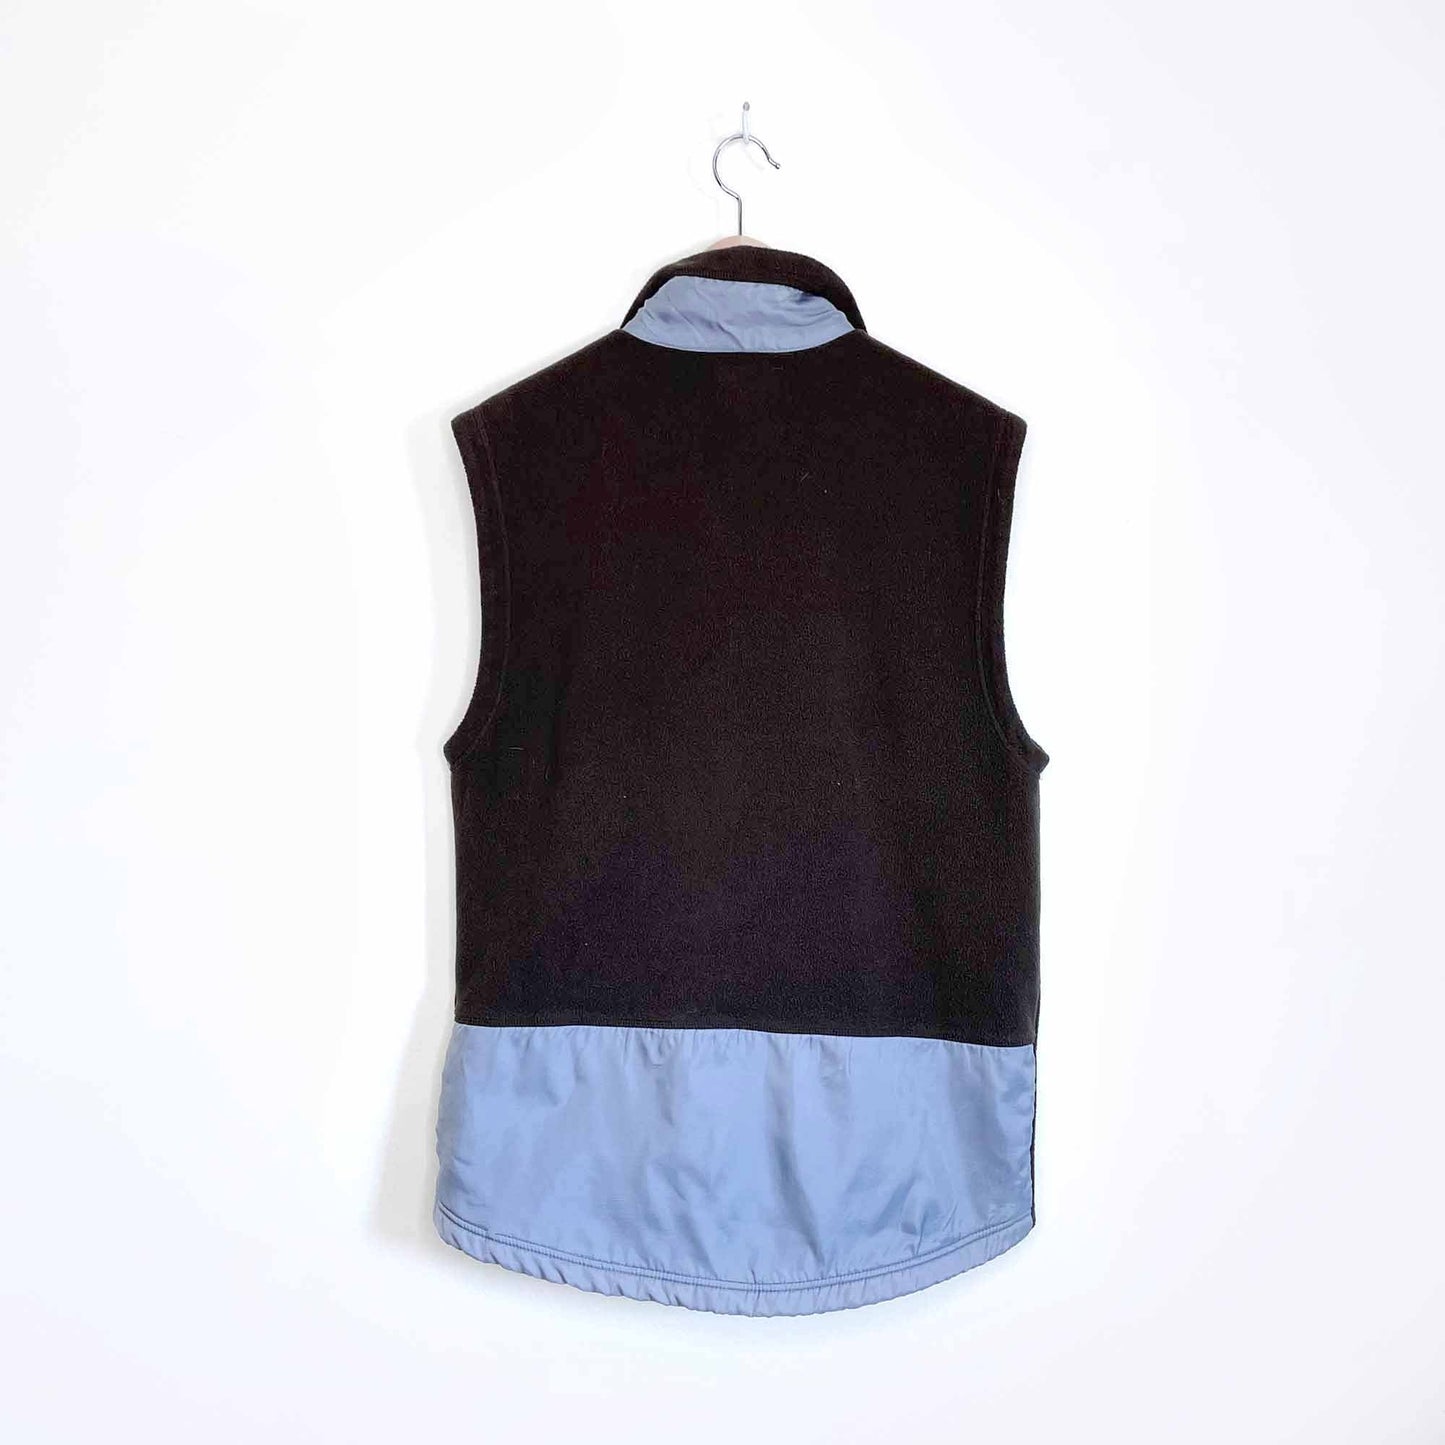 vintage club monaco cmx sport fleece vest - size medium